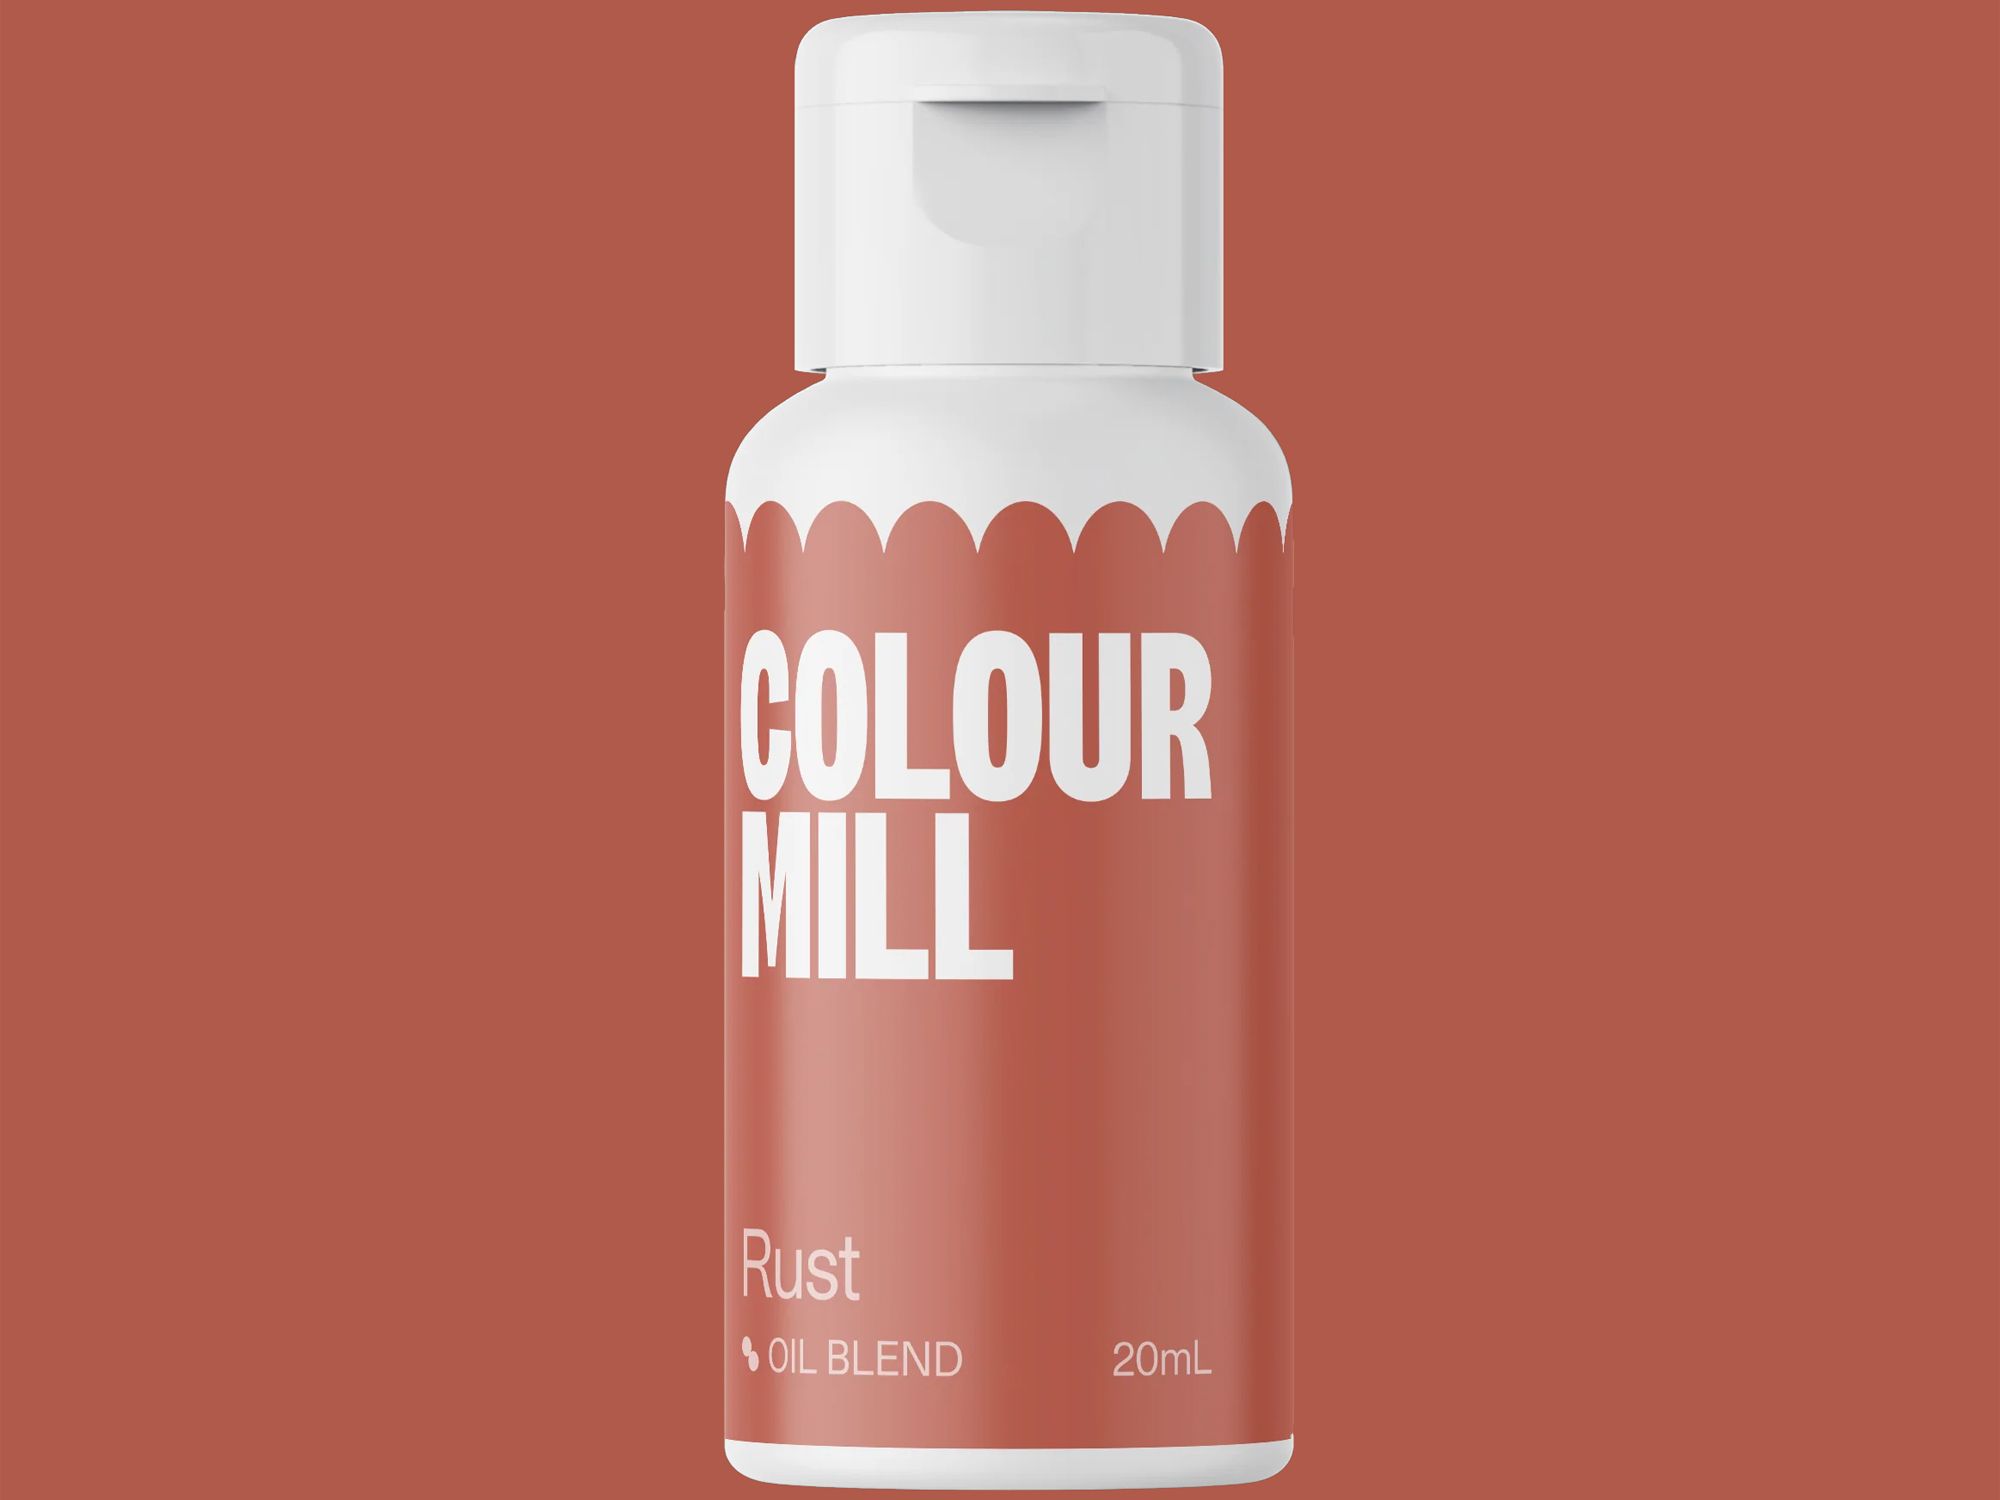 Colour Mill Rust (Oil Blend) 20ml